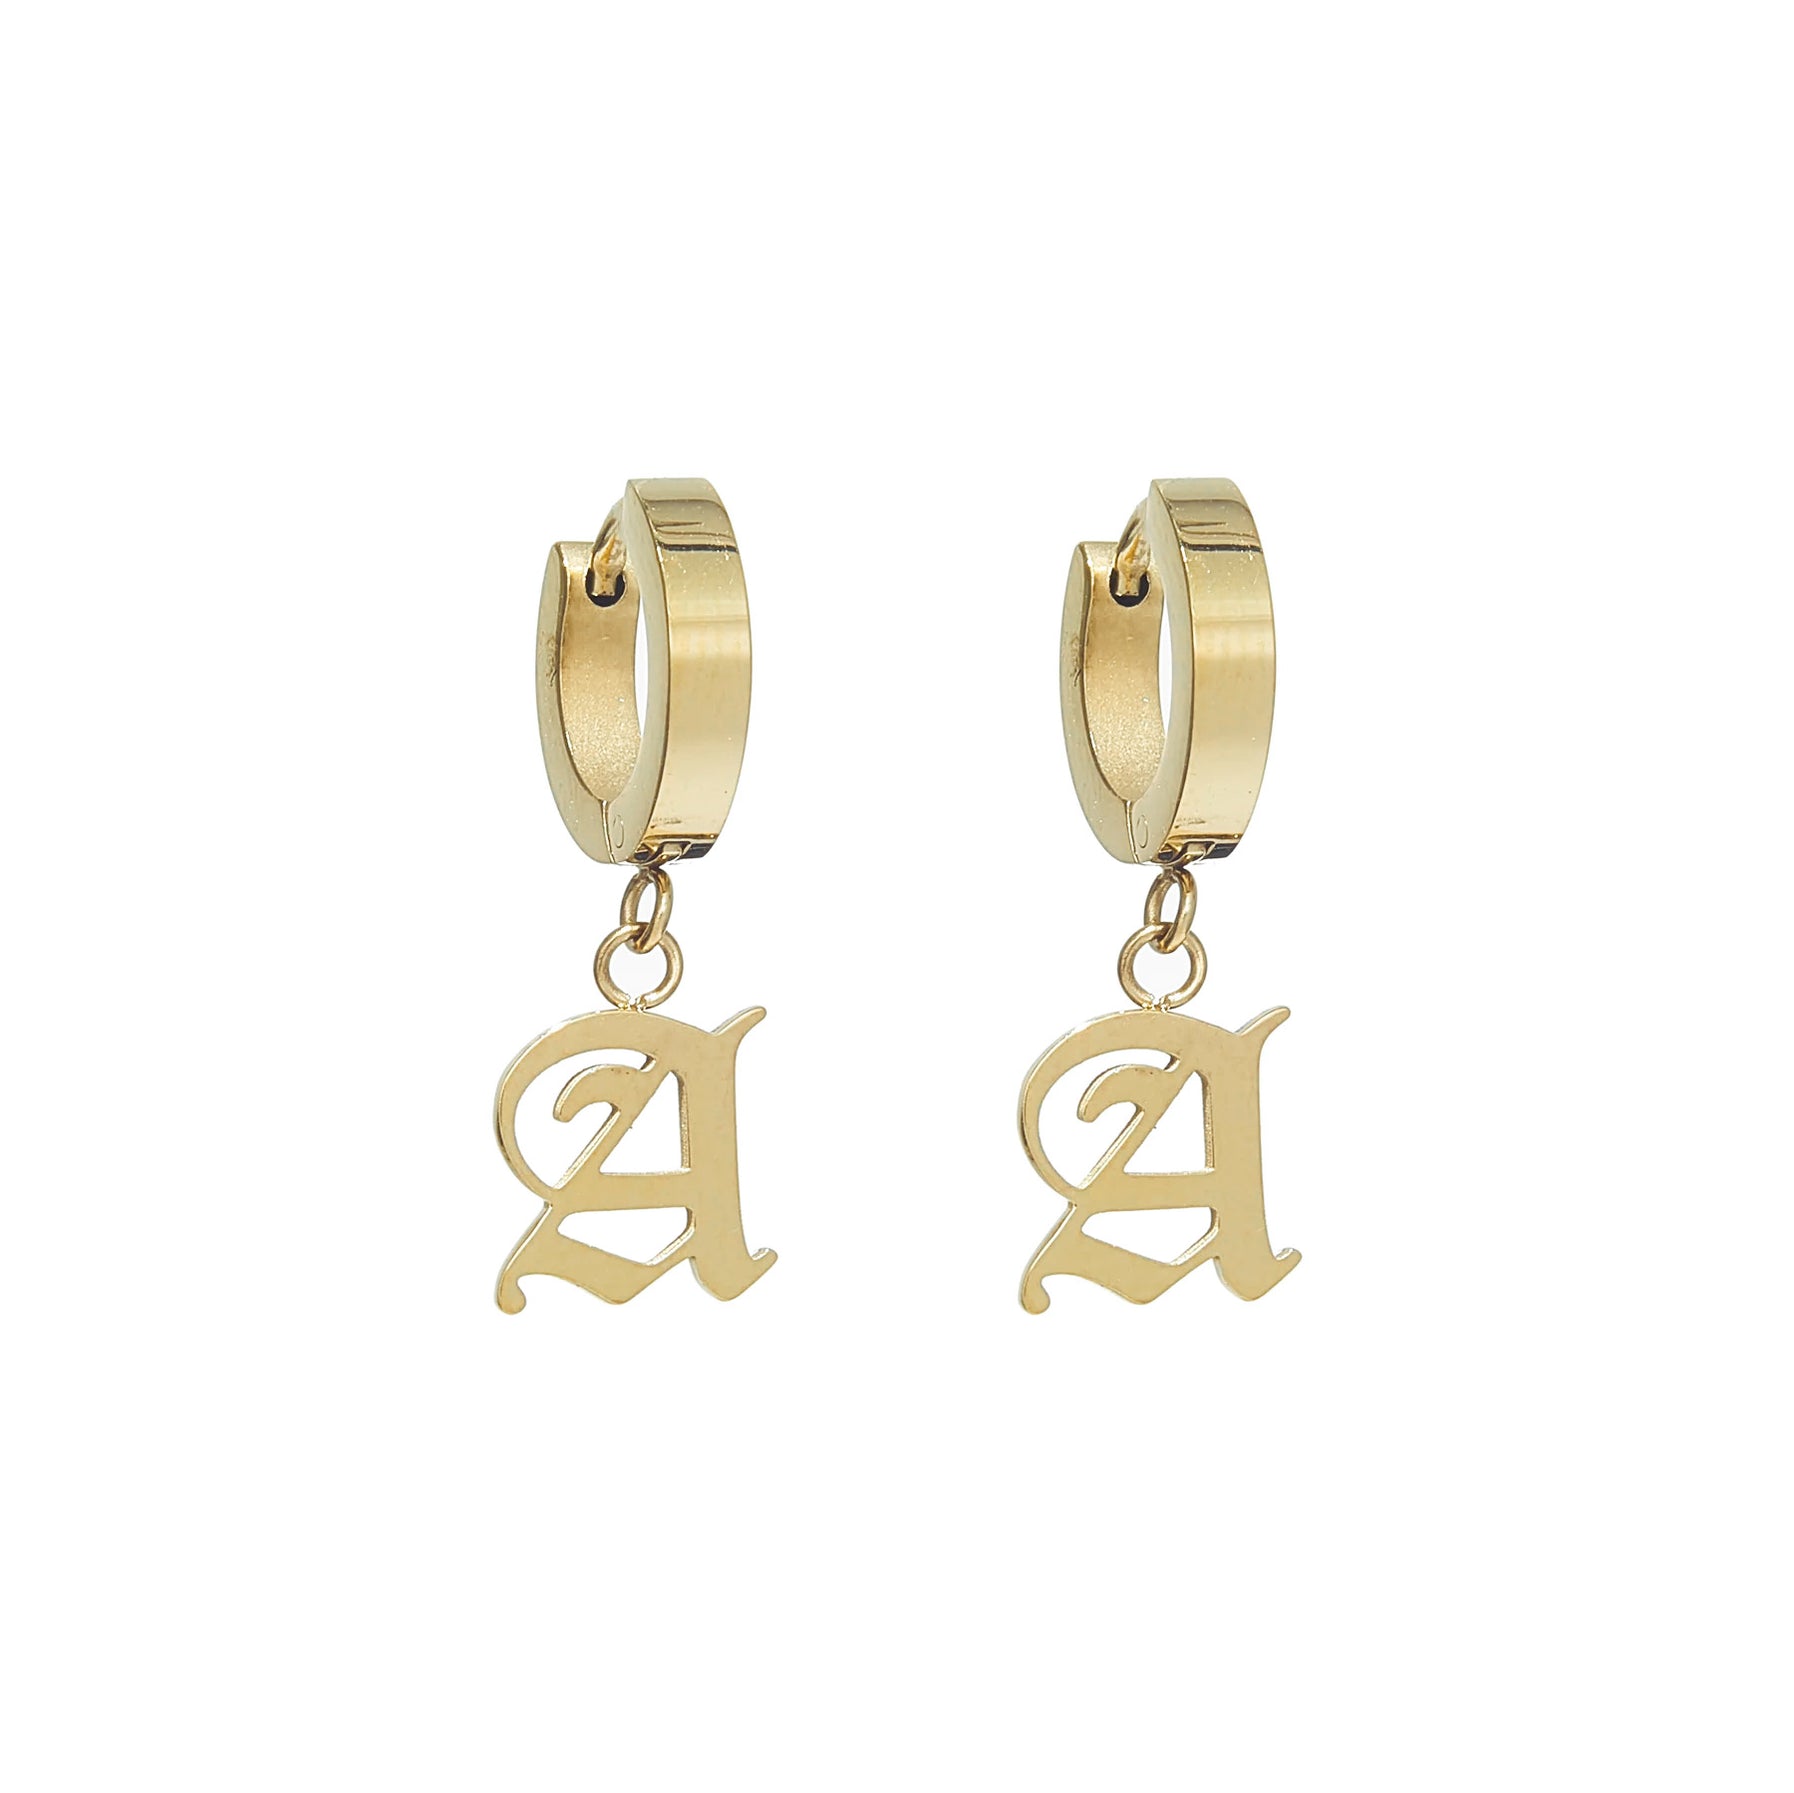 Shop Gold Plated Hoop Earrings & Stud Earrings | Vibeszn